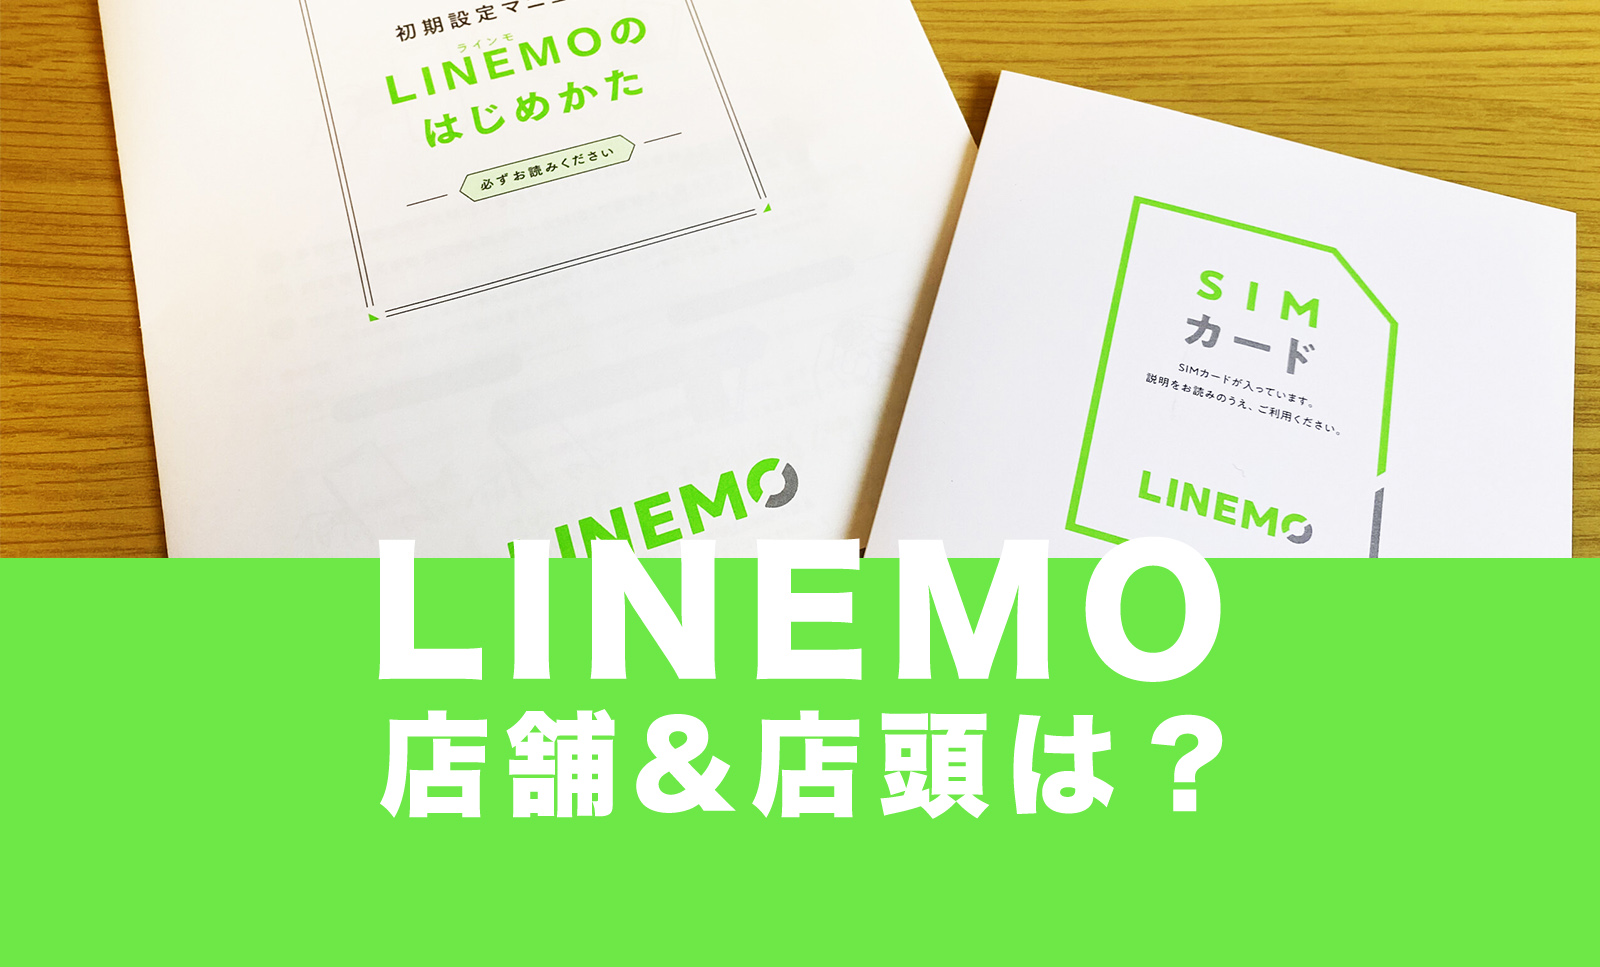 LINEMO(ラインモ)は店舗なし！東京も0店舗。店頭ショップでの契約サポートは提供されない。のサムネイル画像